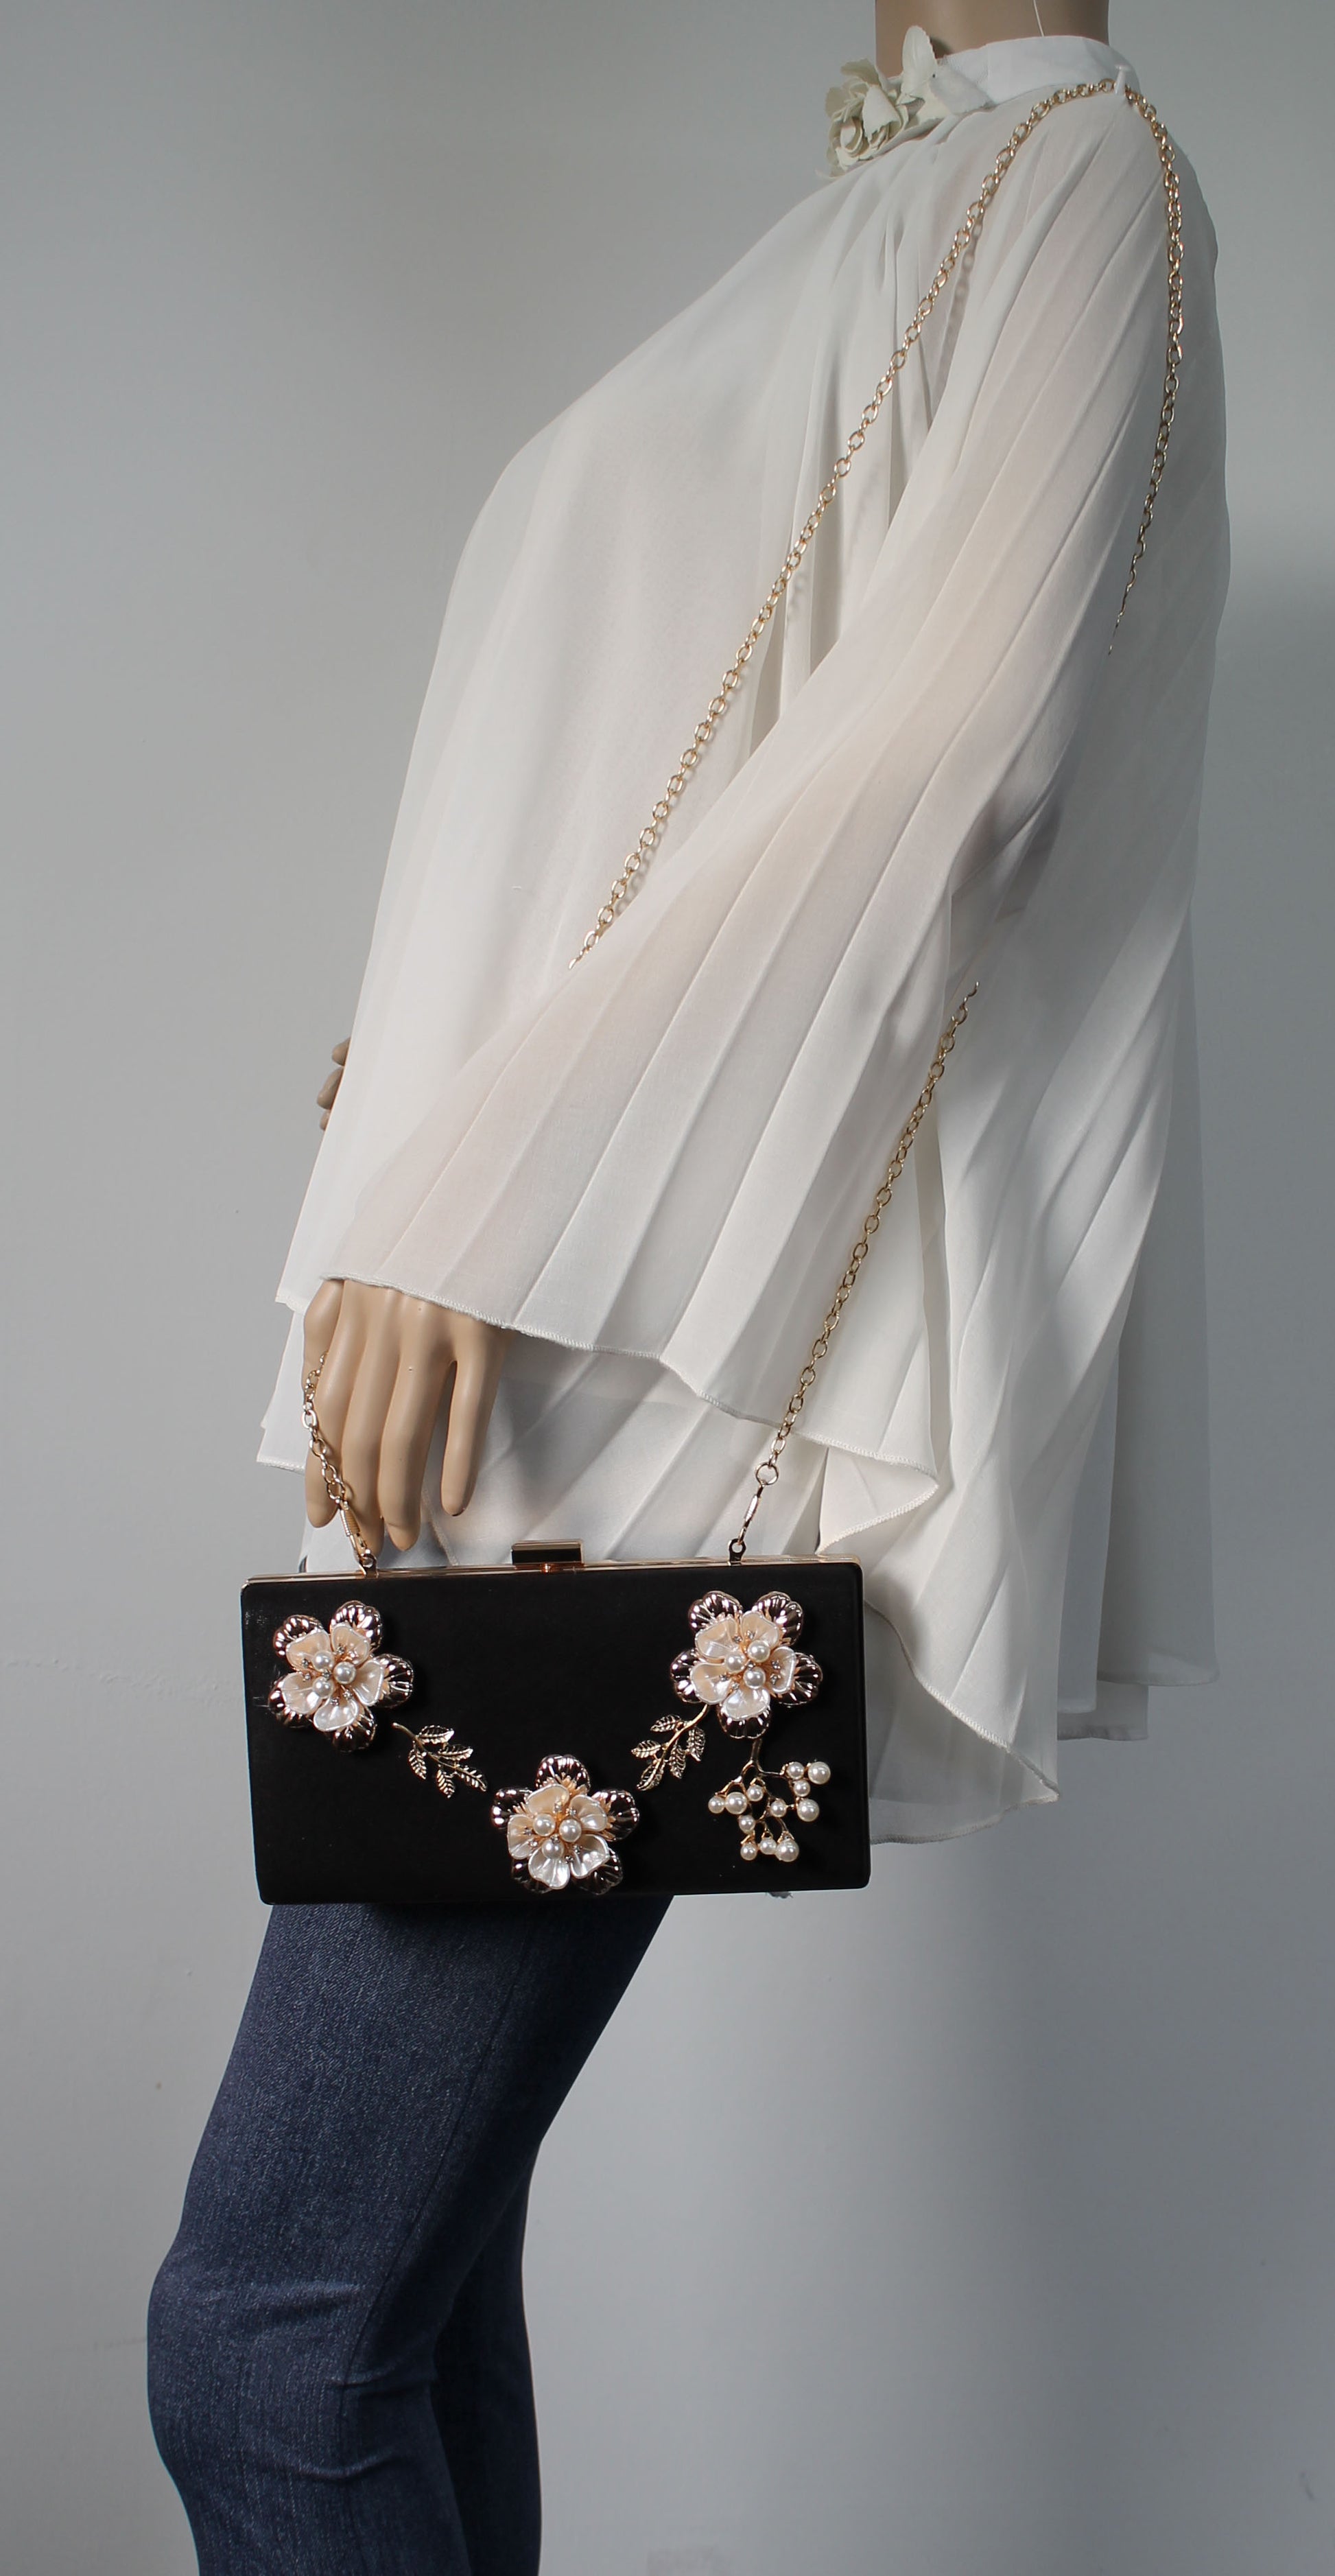 SWANKYSWANS Payton Floral Detail Clutch Bag Black Cute Cheap Clutch Bag For Weddings School and Work